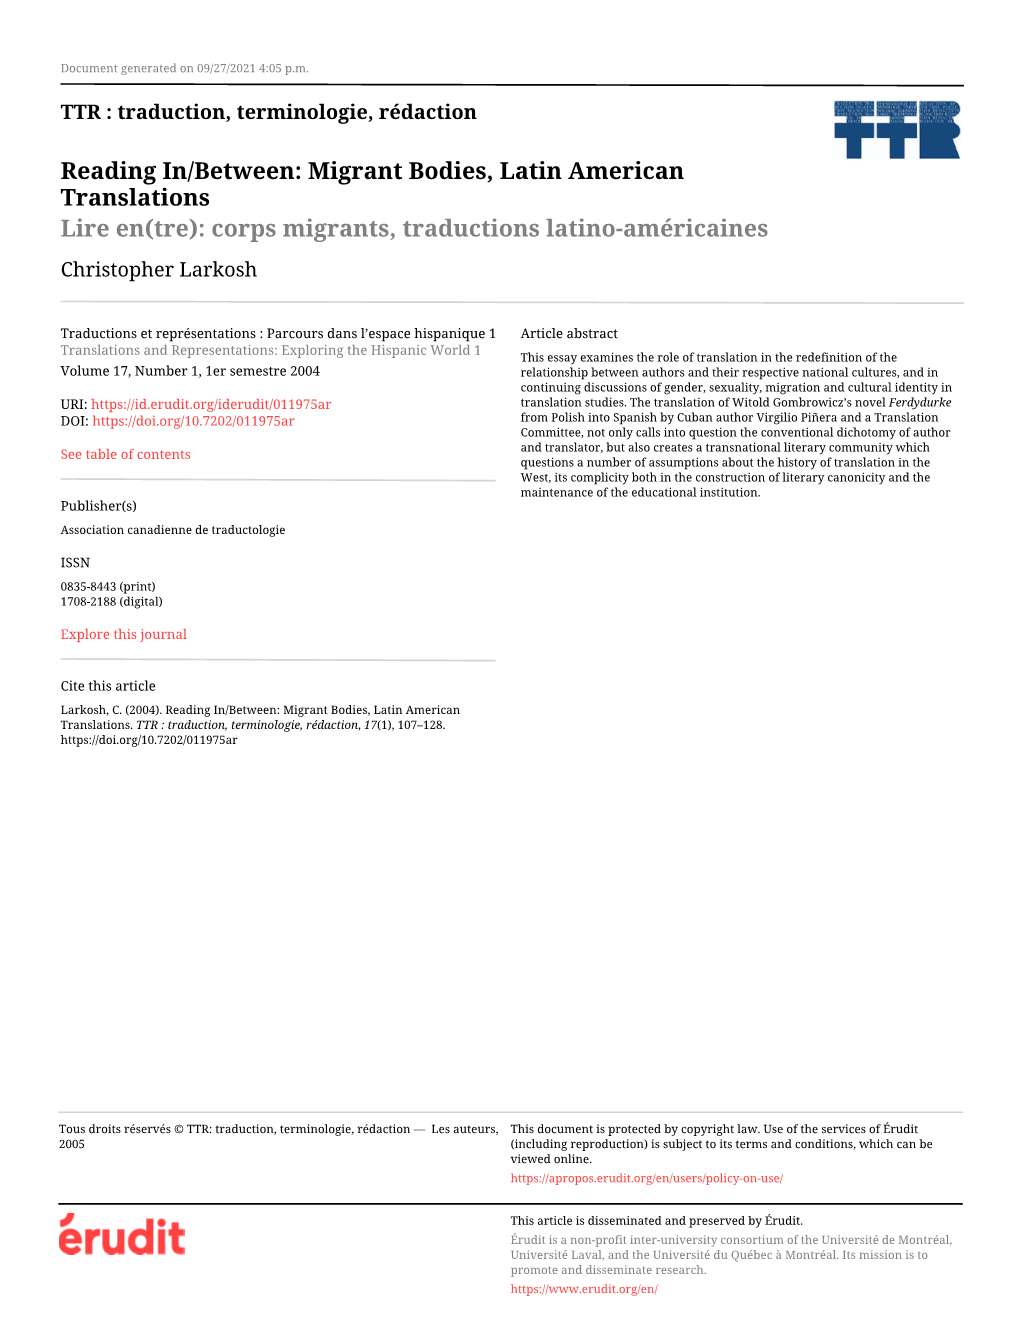 Migrant Bodies, Latin American Translations Lire En(Tre): Corps Migrants, Traductions Latino-Américaines Christopher Larkosh